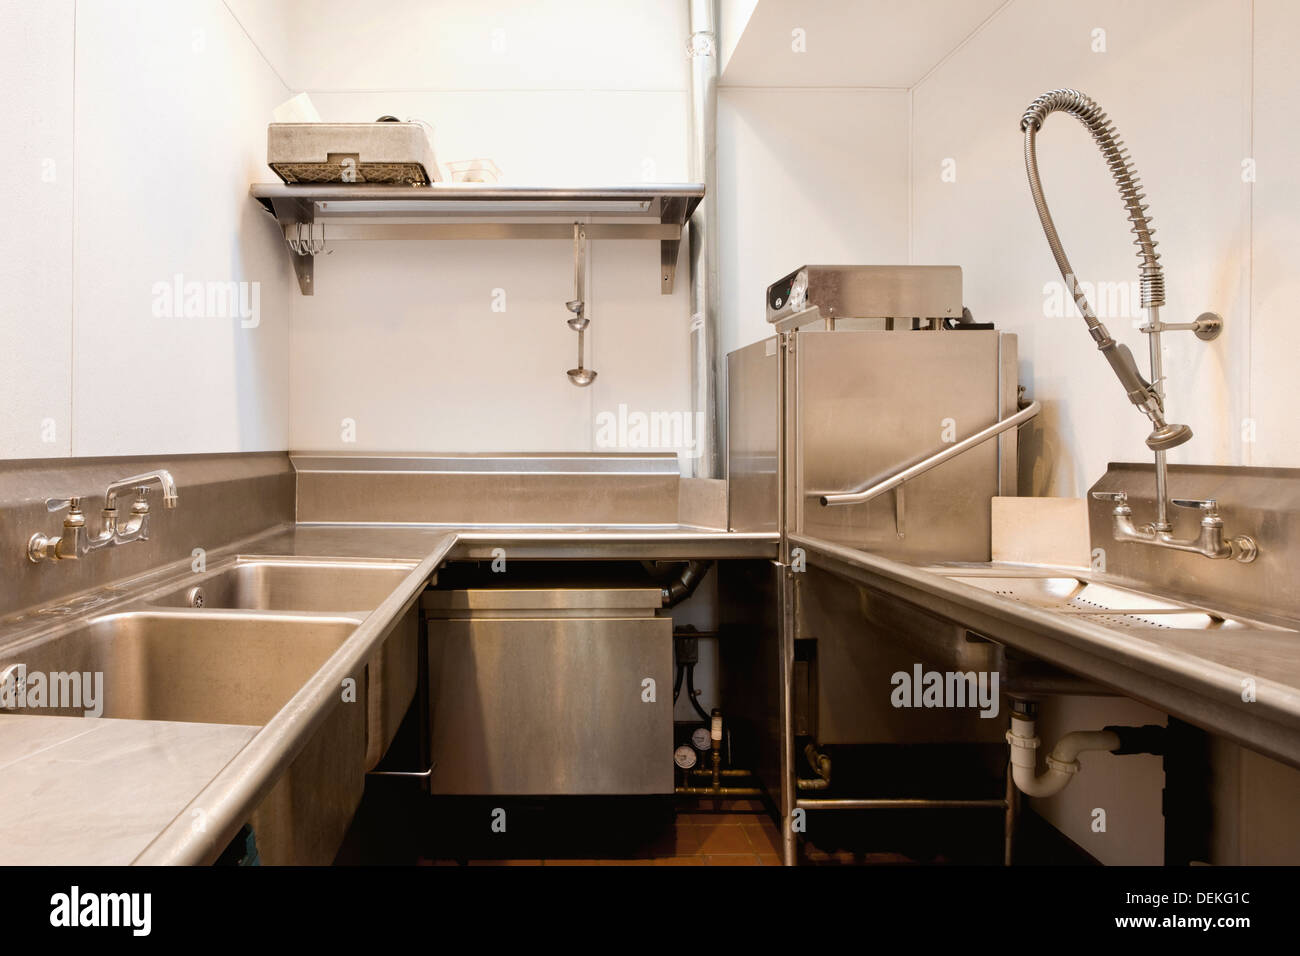 Empty Commercial Kitchen In Restaurant Stock Photo 60665960